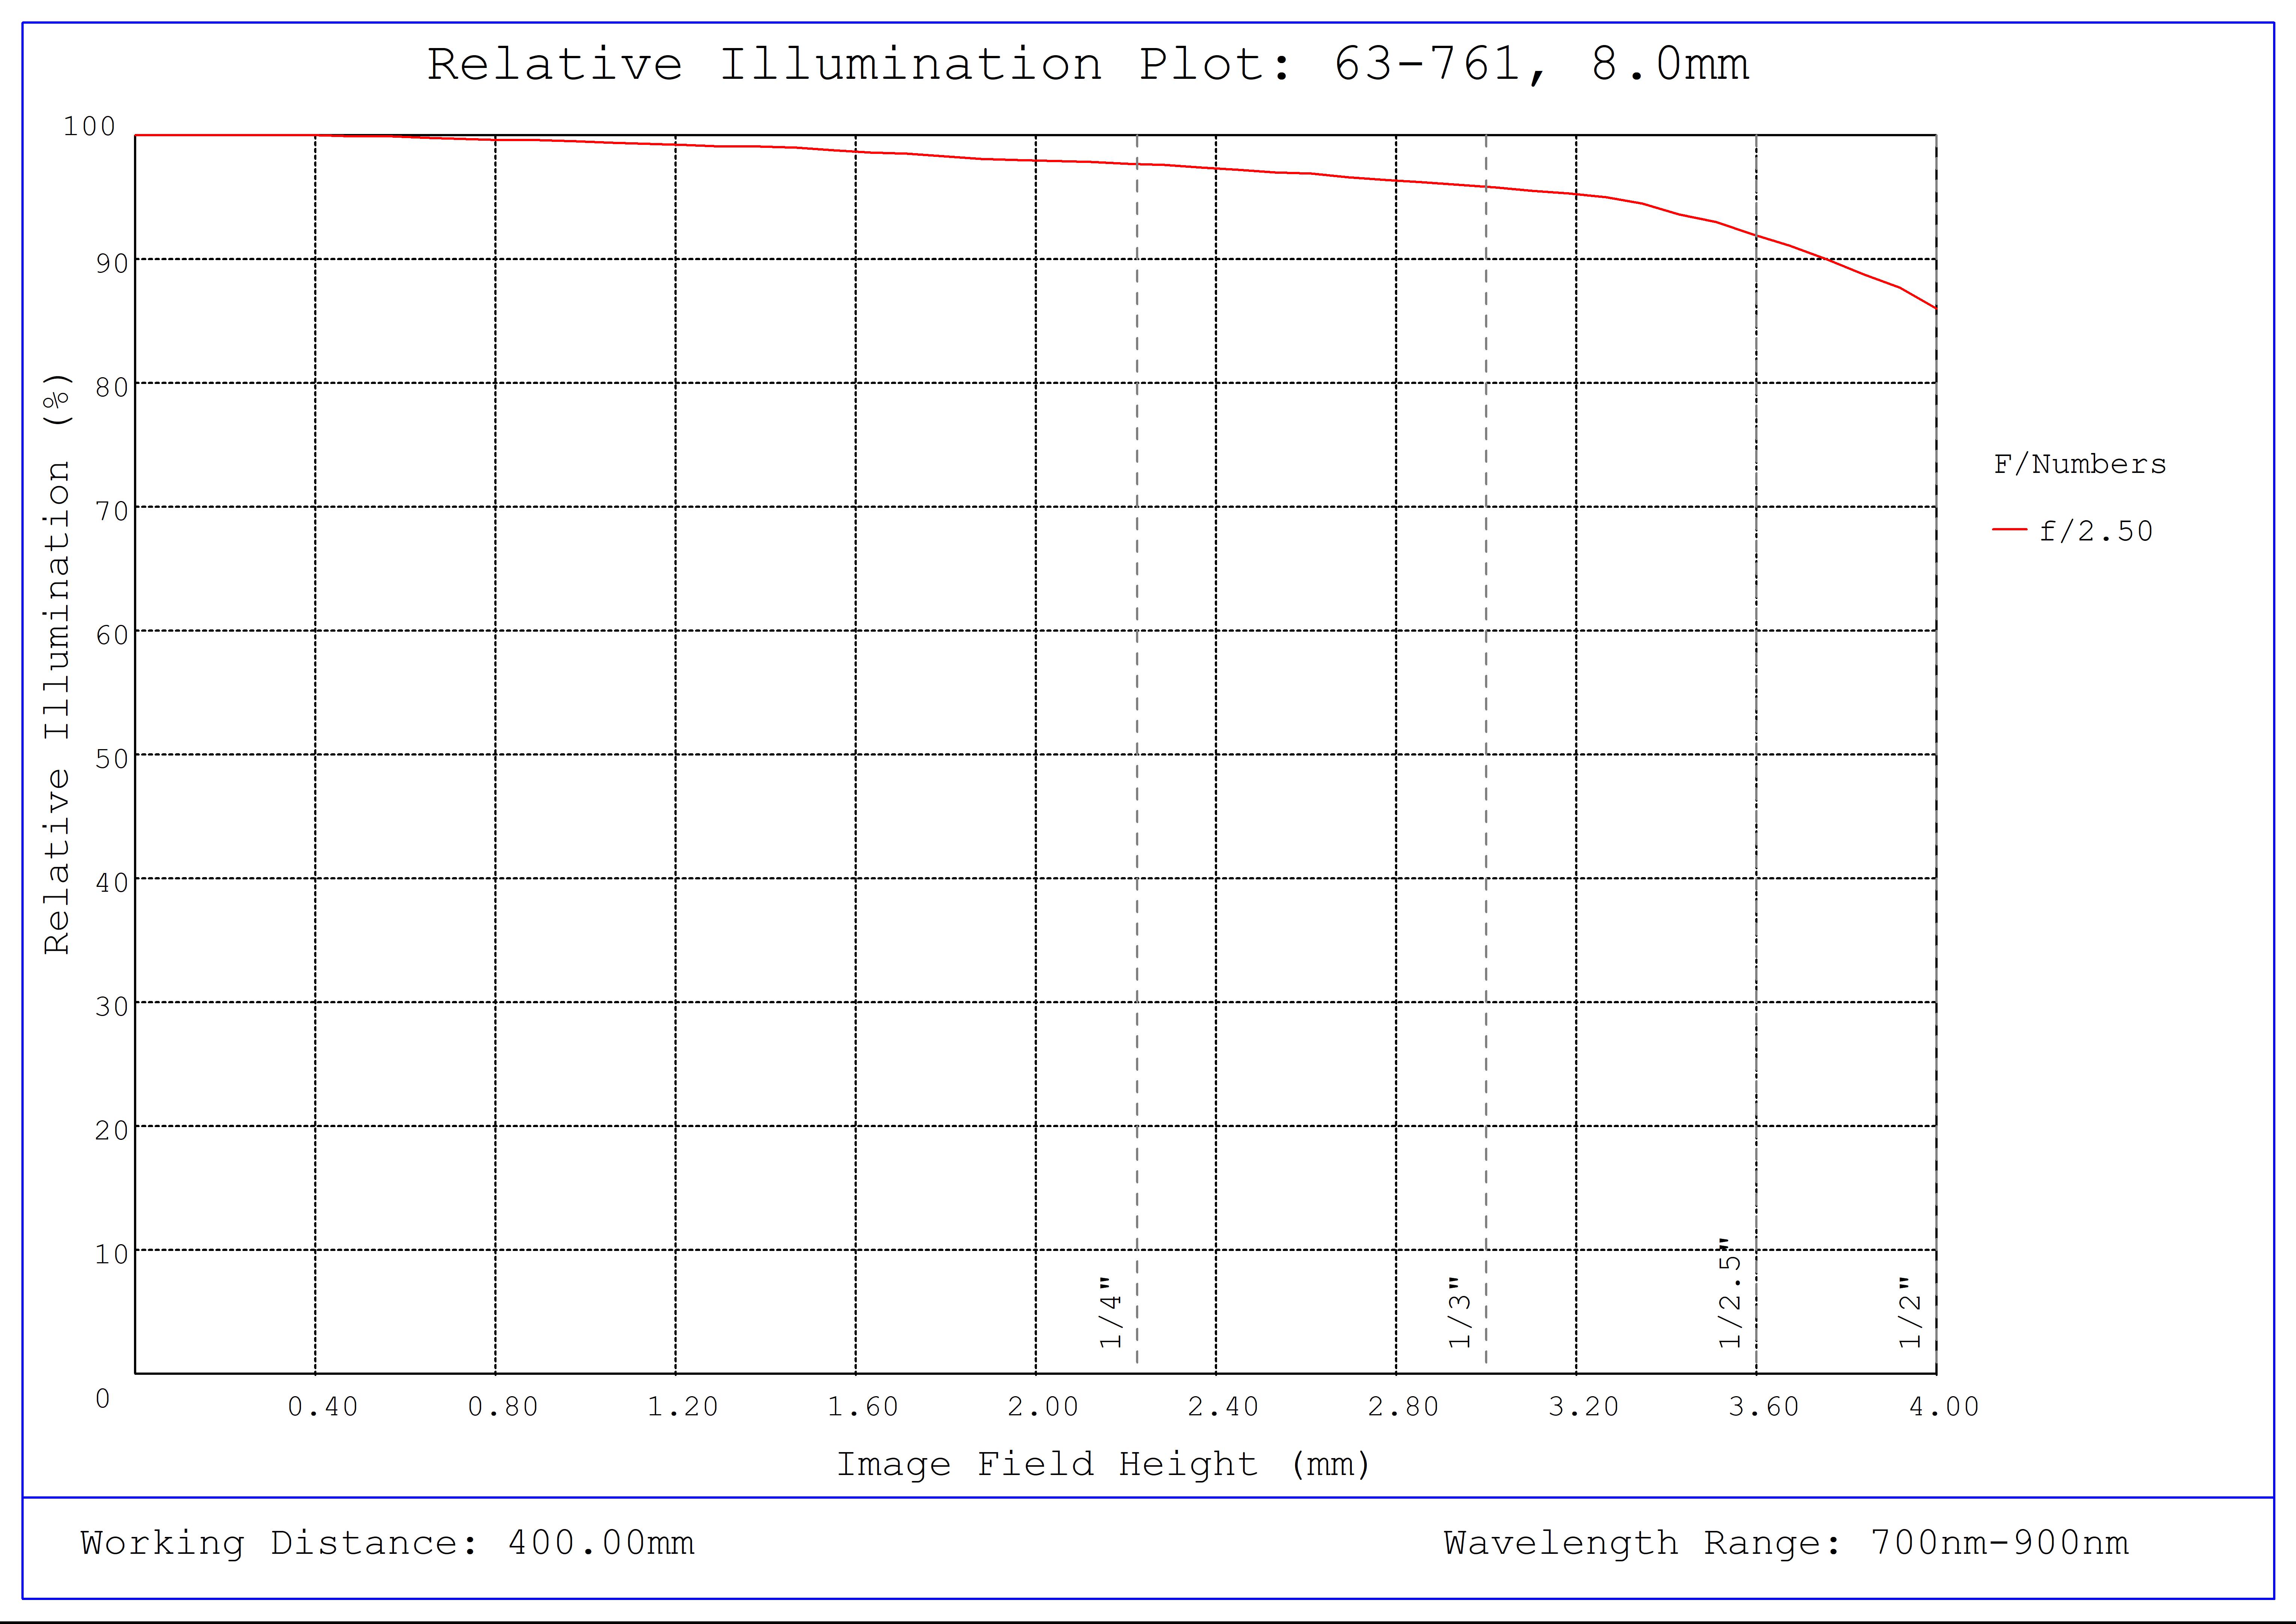 #63-761, f/2.5, NIR, 8.0mm HEO Series M12 Lens, Relative Illumination Plot